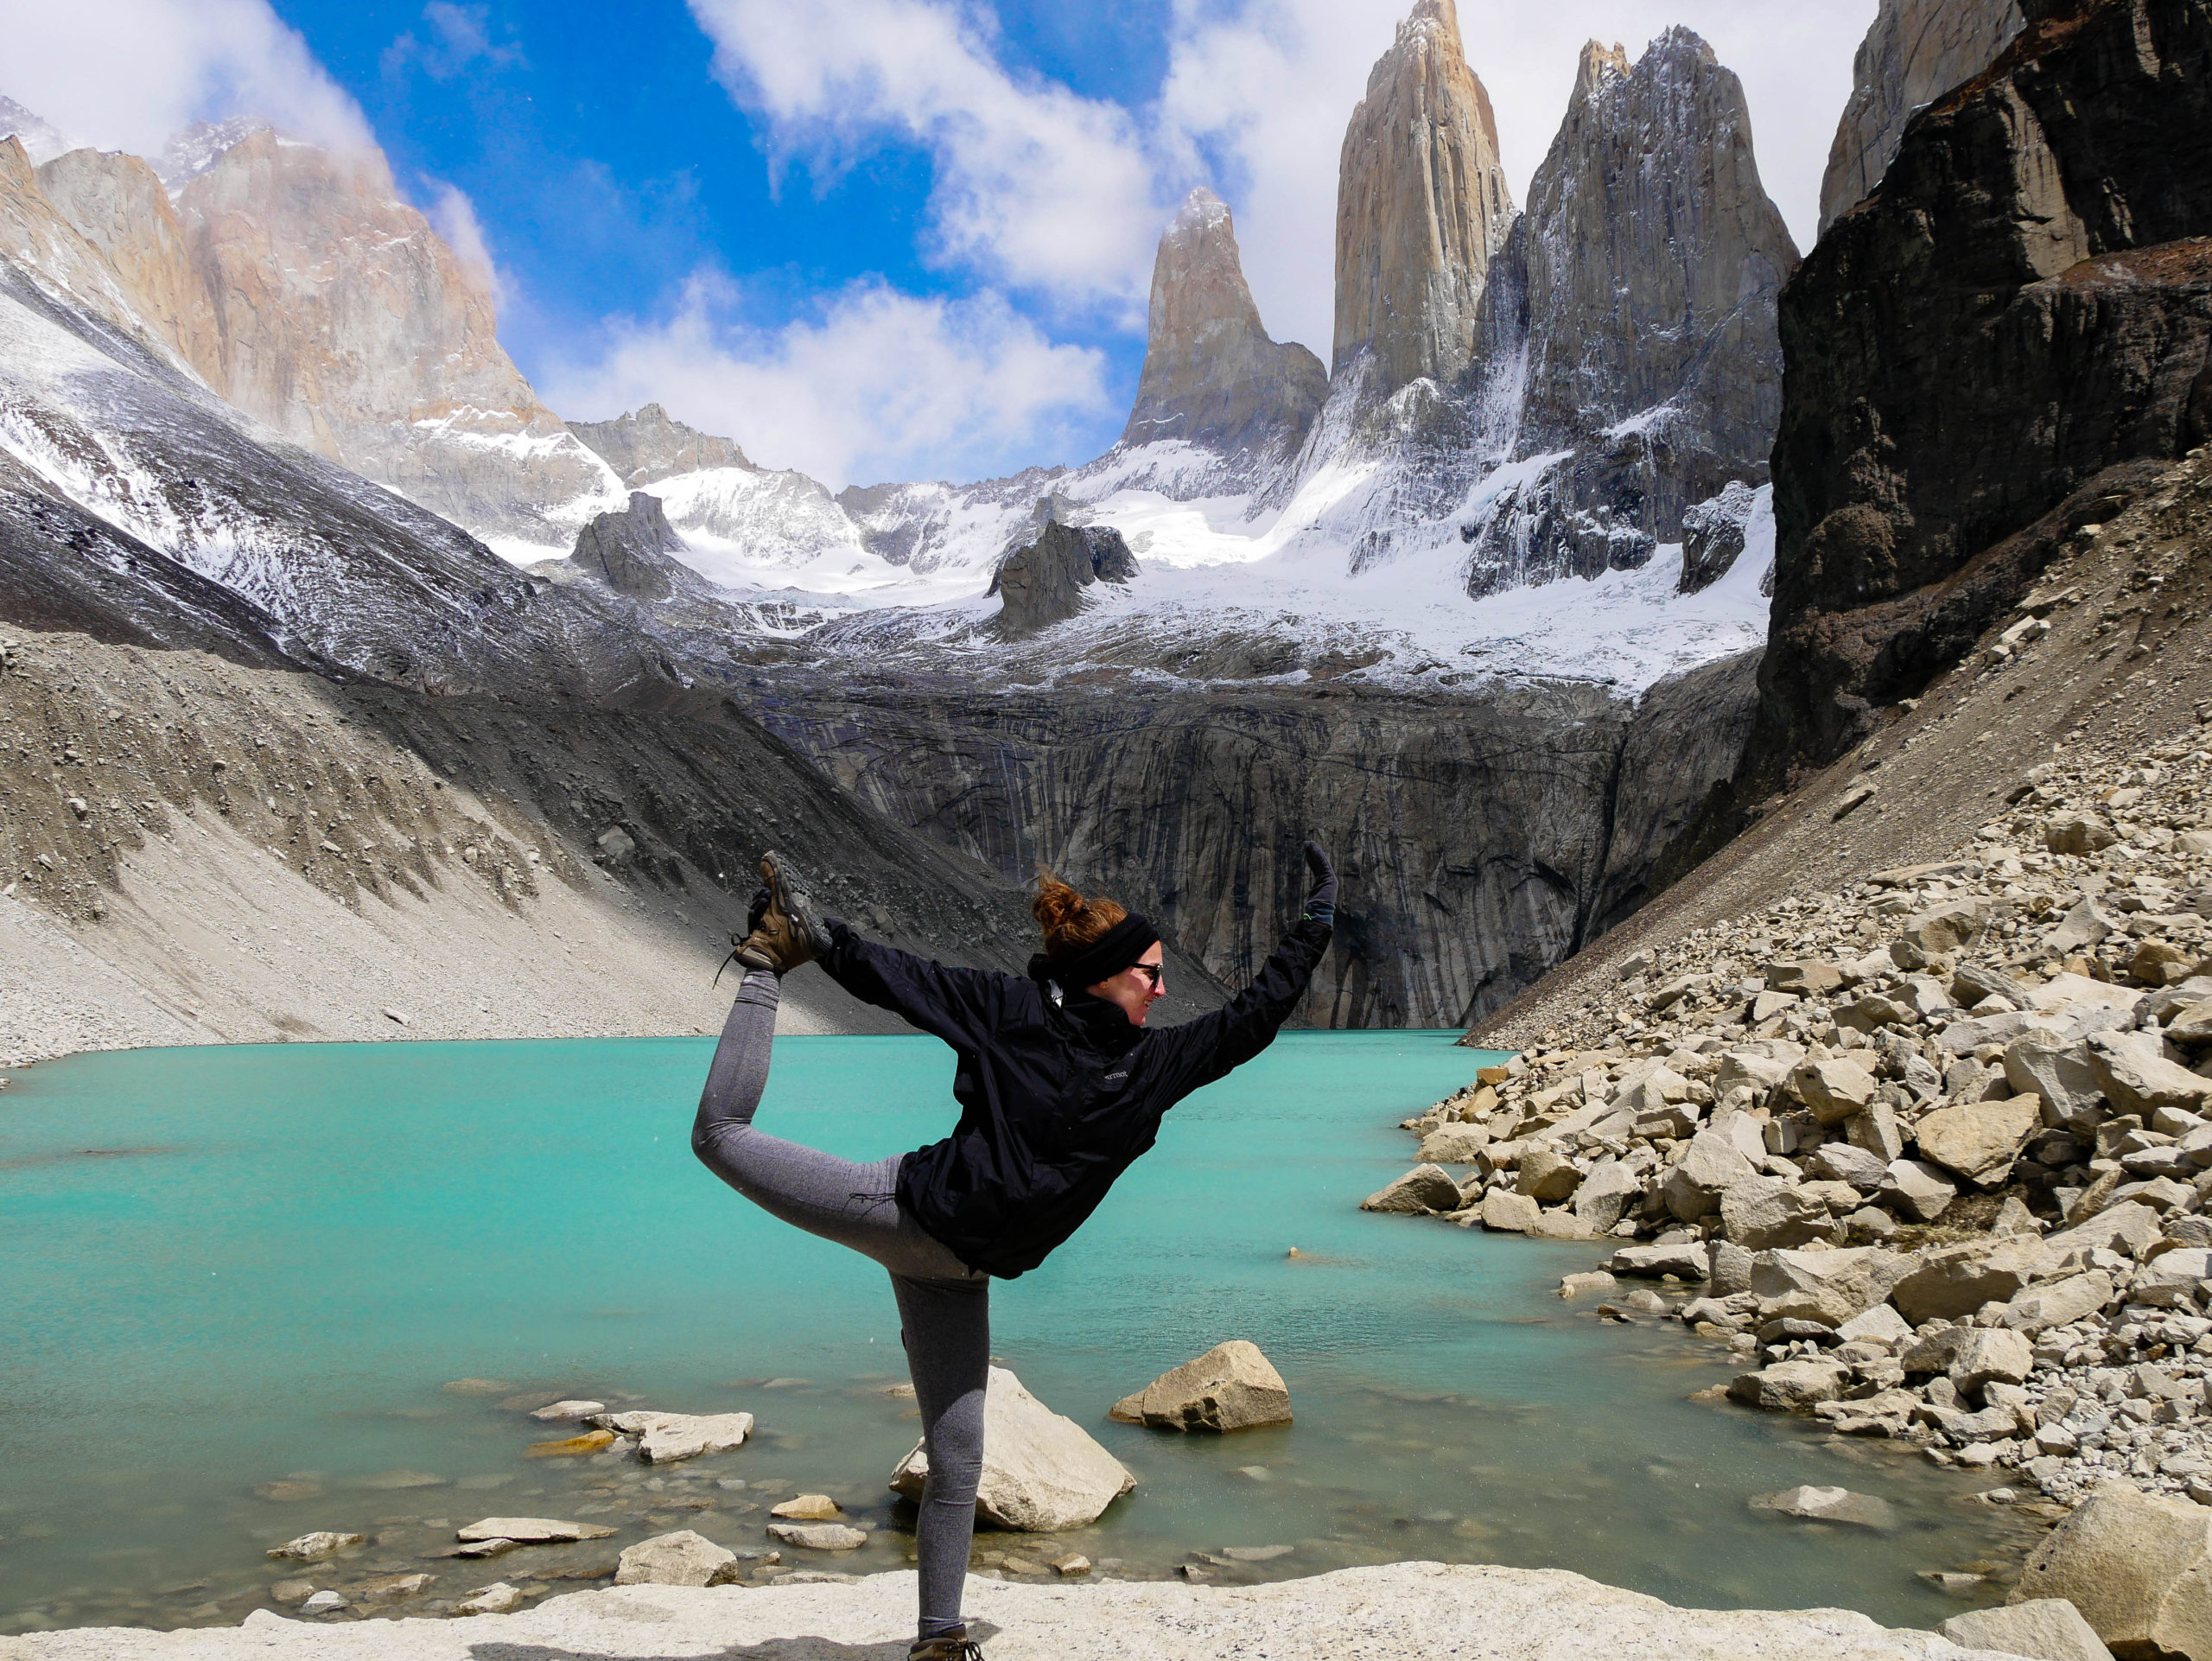 Dancer's pose at the base of Las Torres in Patagonia